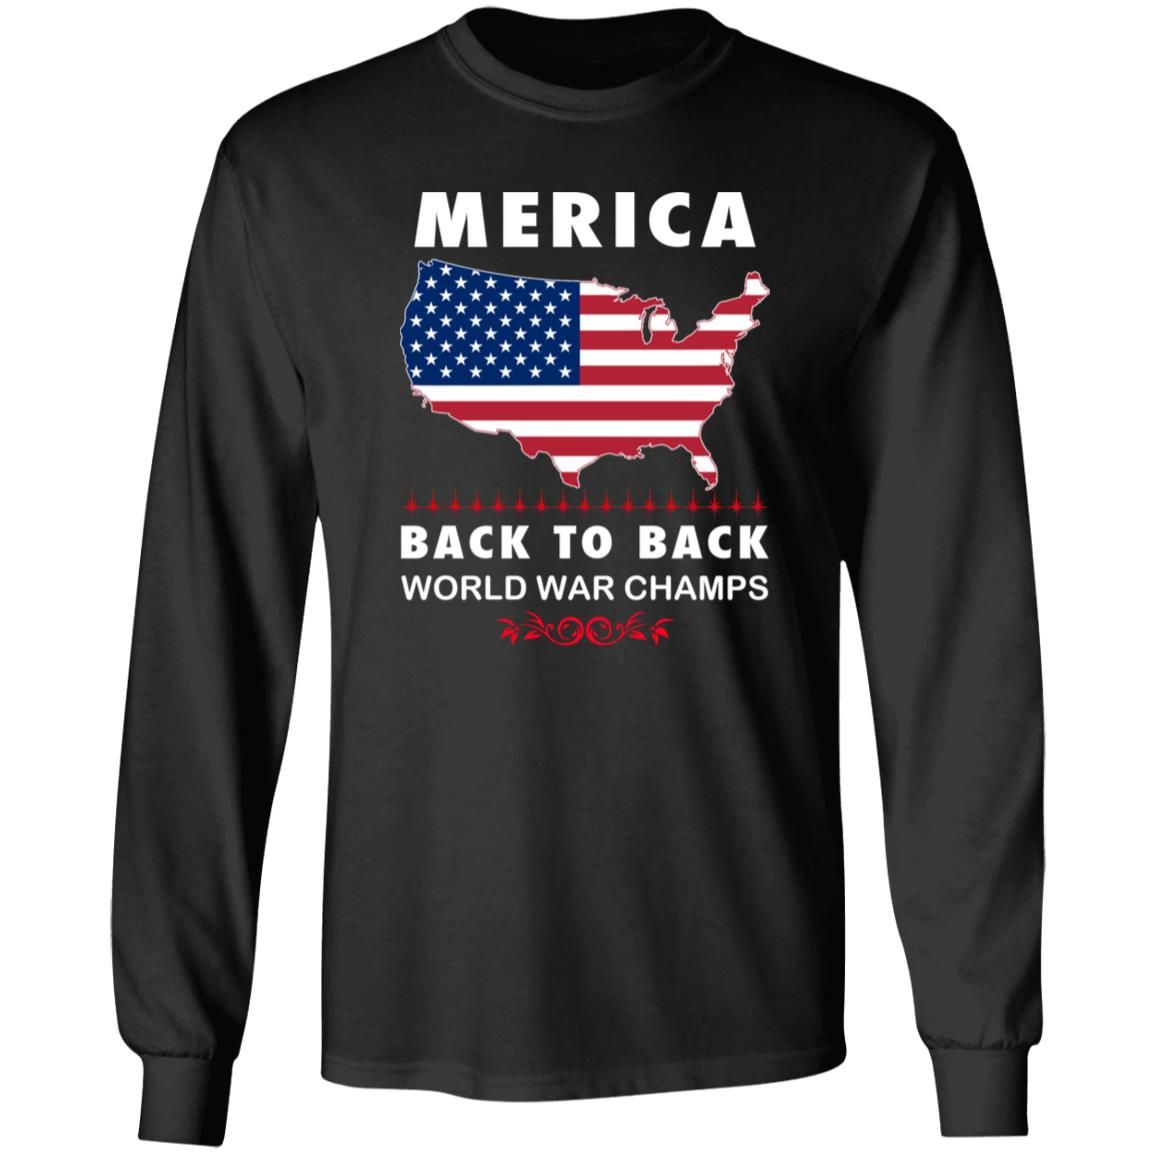 ‘Merica back to back world war champs shirt